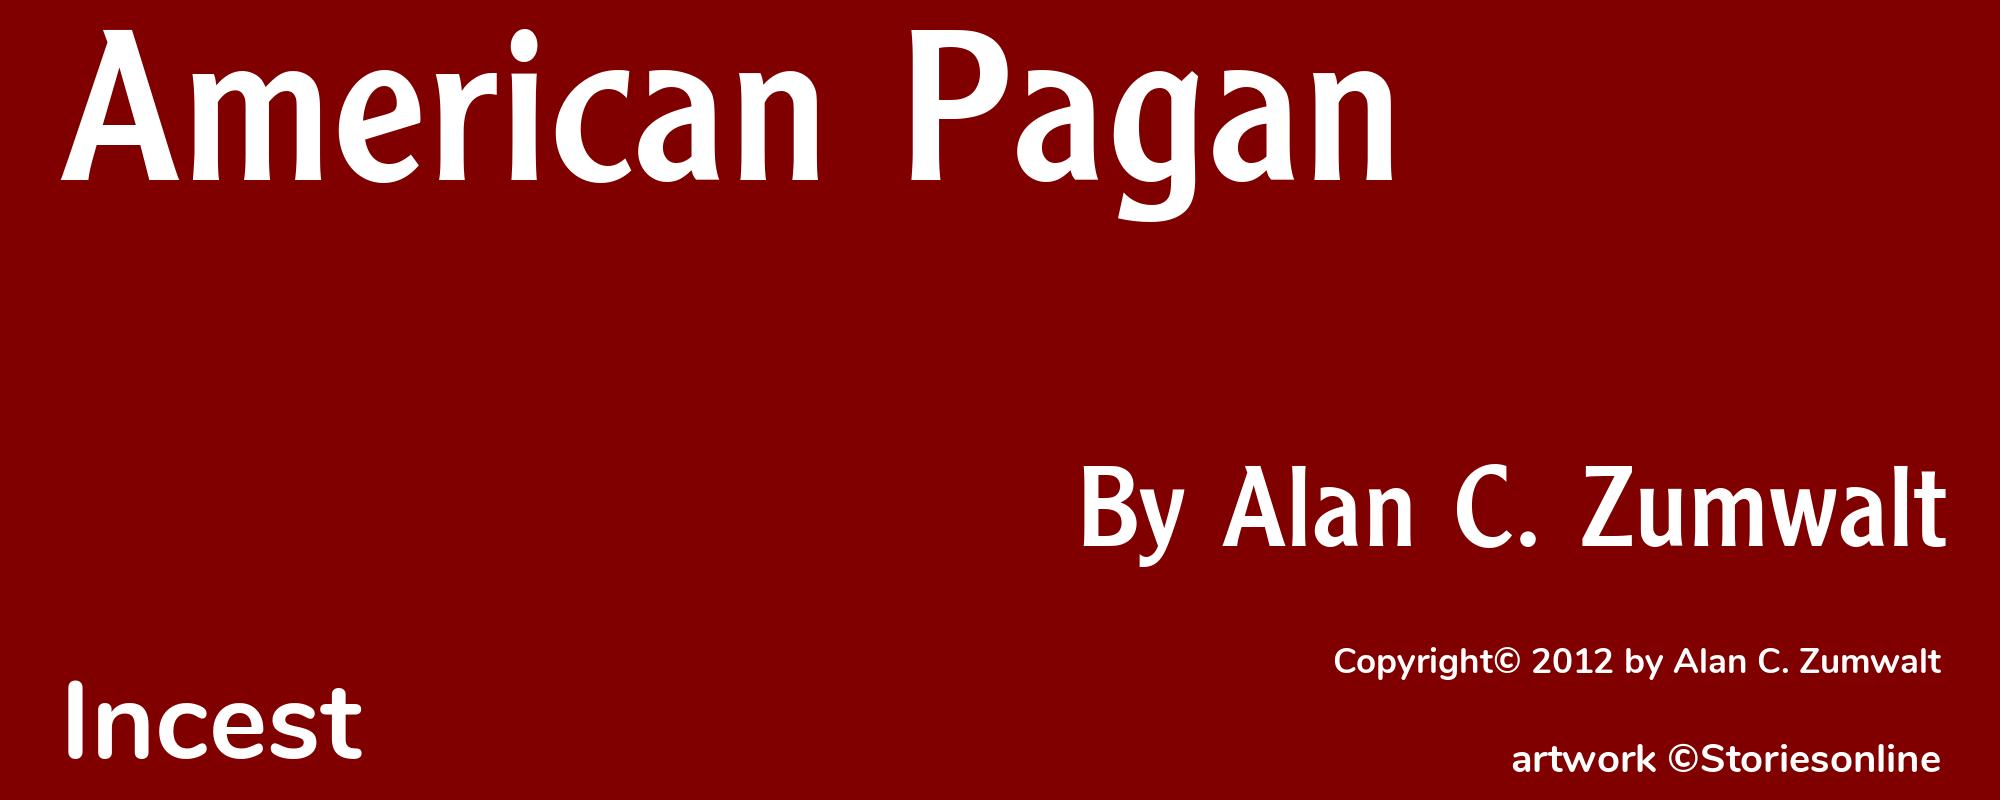 American Pagan - Cover